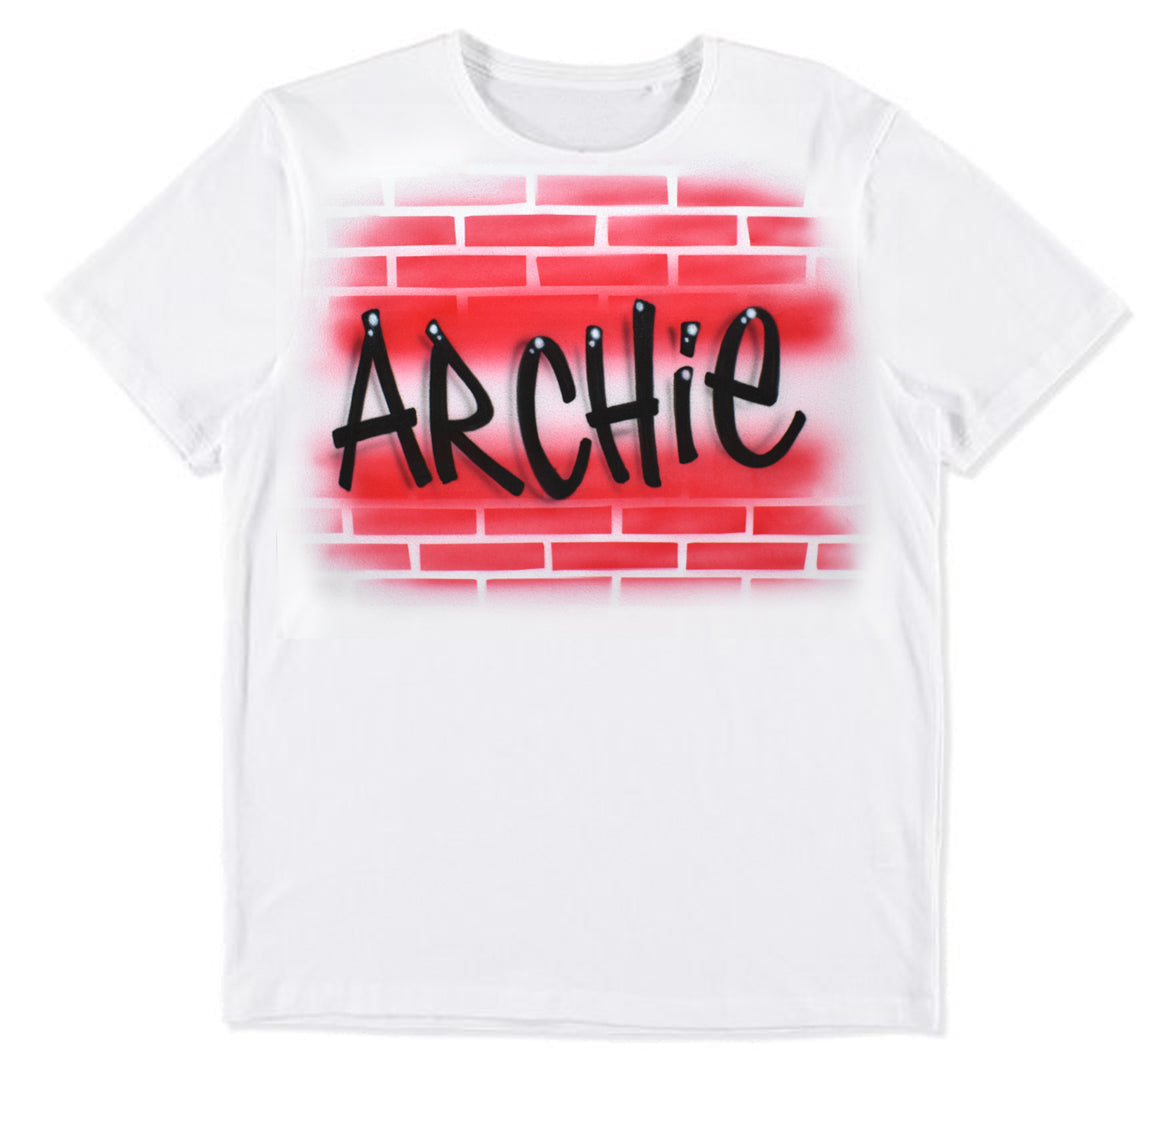 Airbrush T-shirt Name Design 015